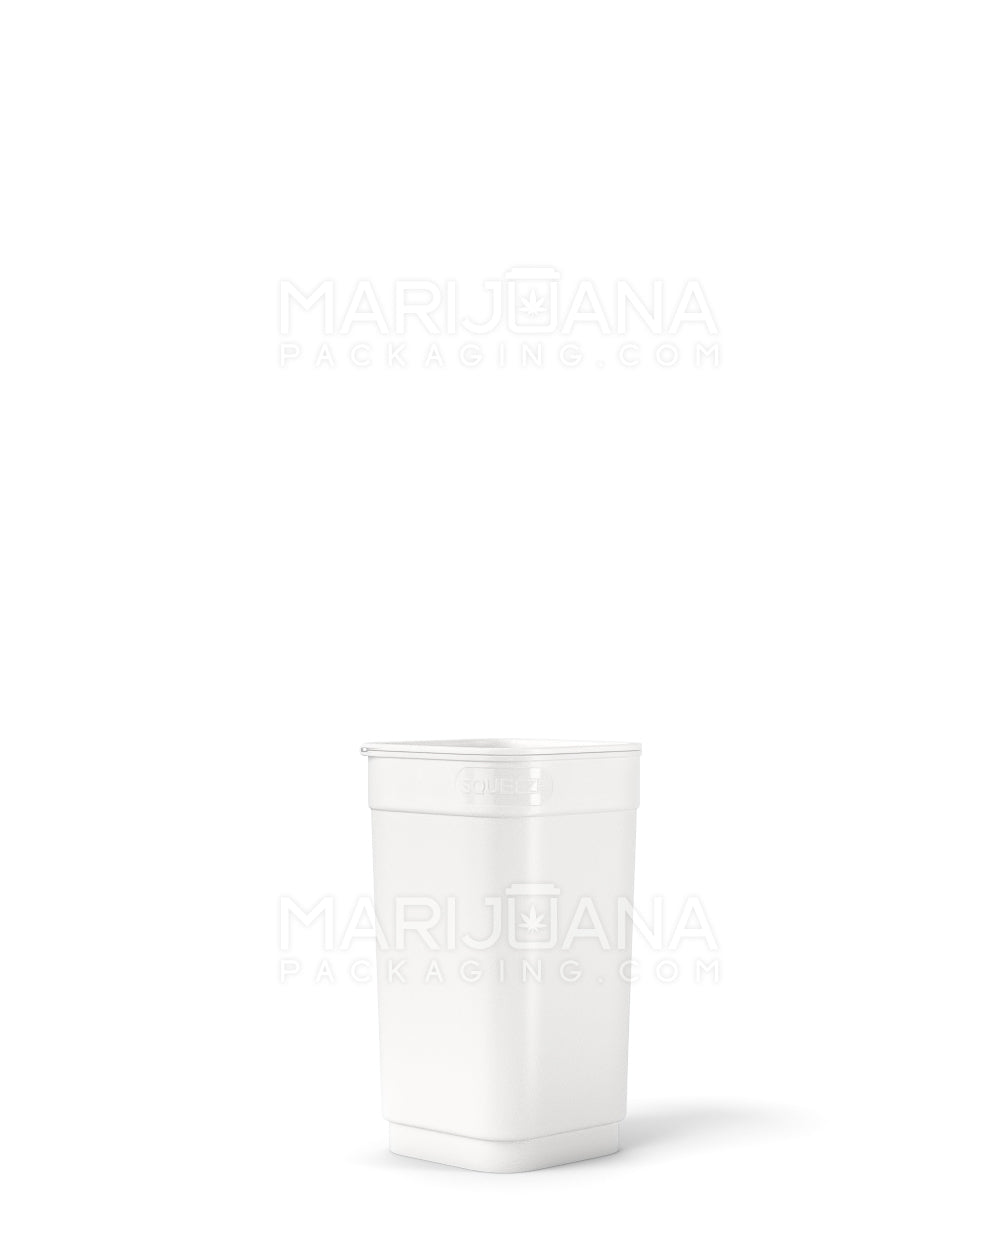 POLLEN GEAR Child Resistant 100% Recyclable Opaque White Pop Box Pop Top Bottles | 13dr - 2g | Sample